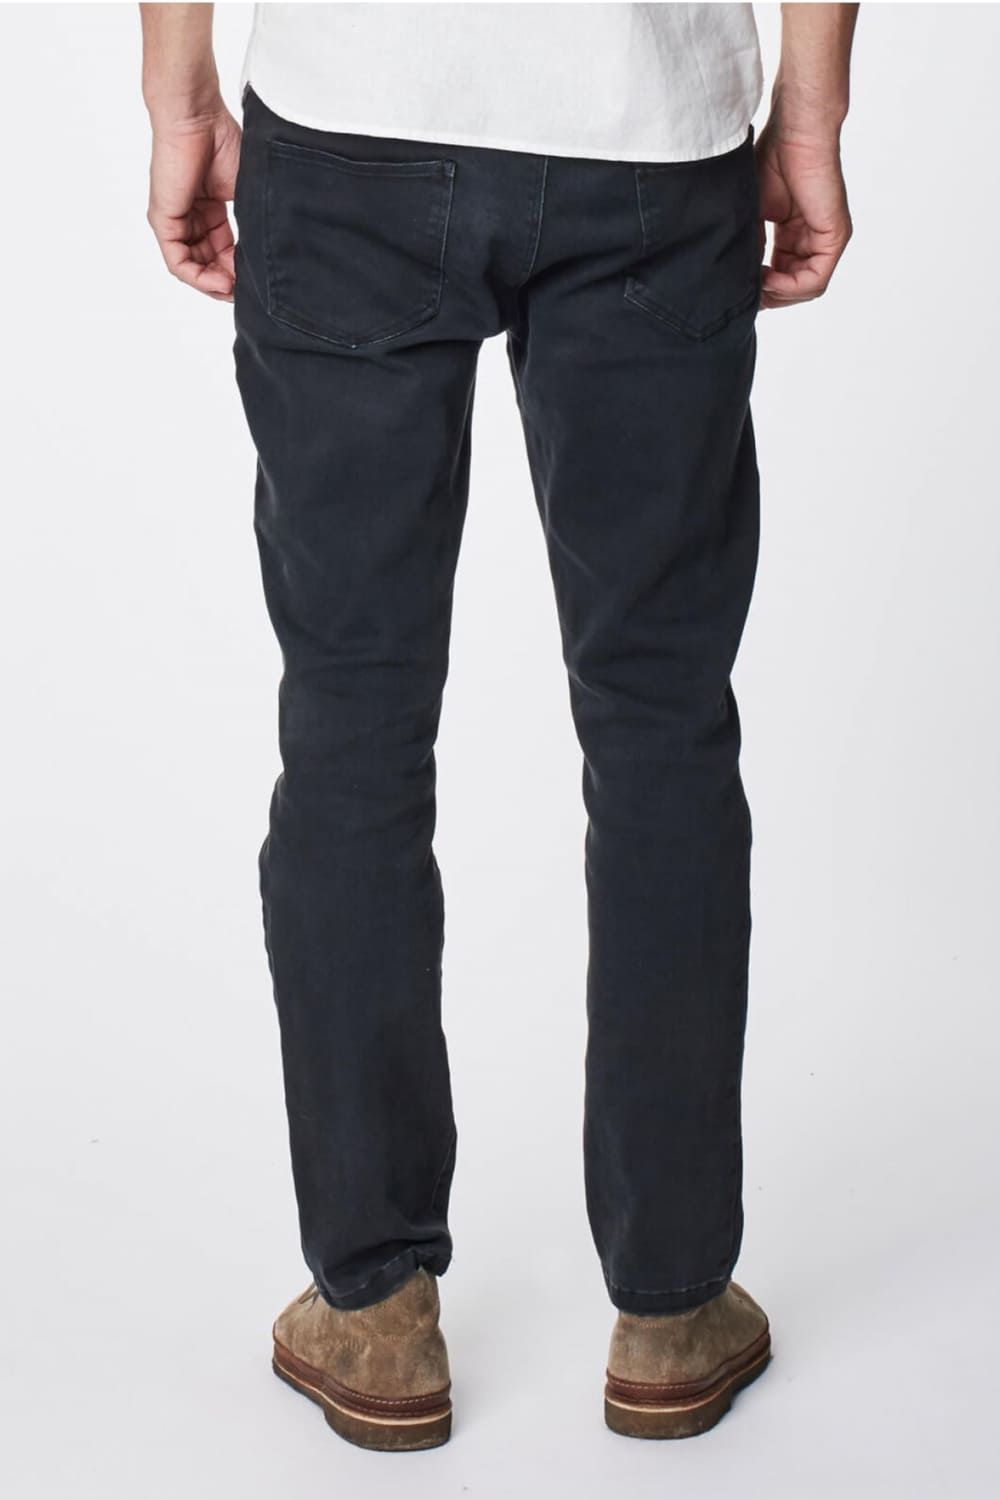 roberta organic fashion Thought Männer Jeans stone black 3